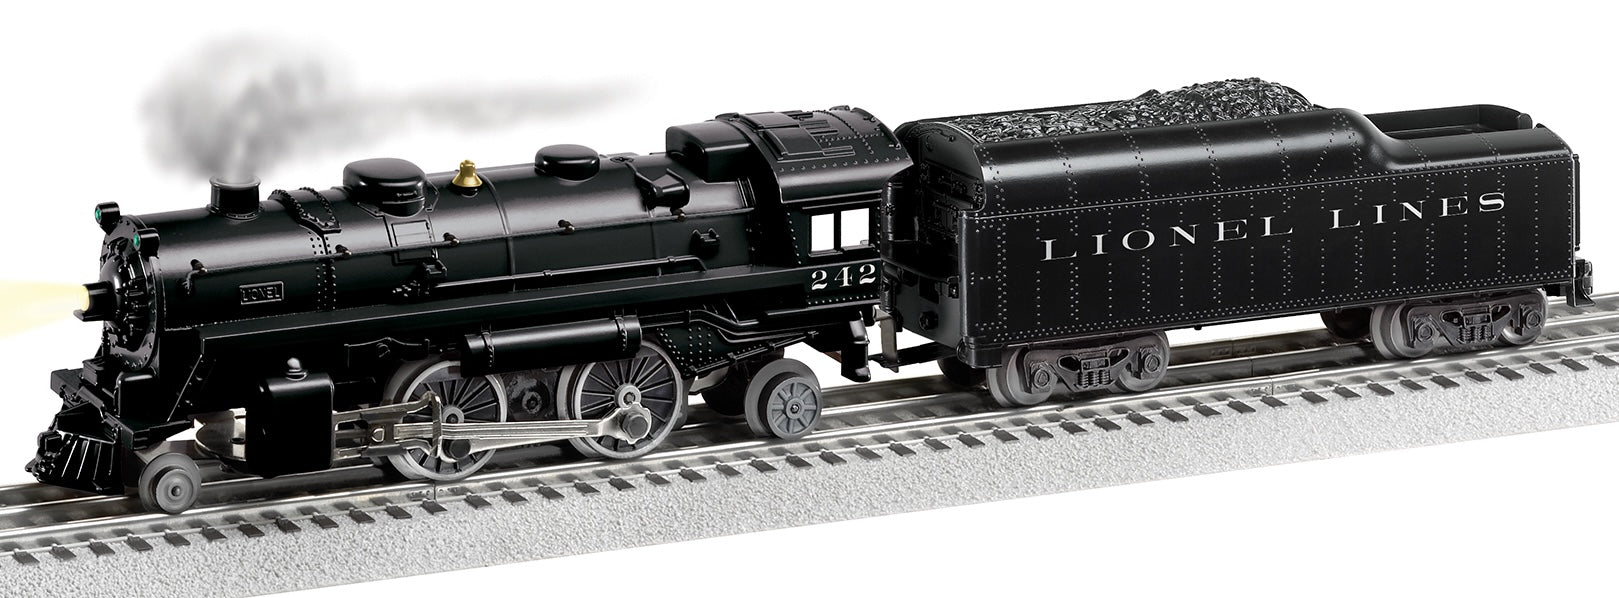 Lionel 2445010 - LionChief 2-4-2 Steam Locomotive "Lionel Lines" #242